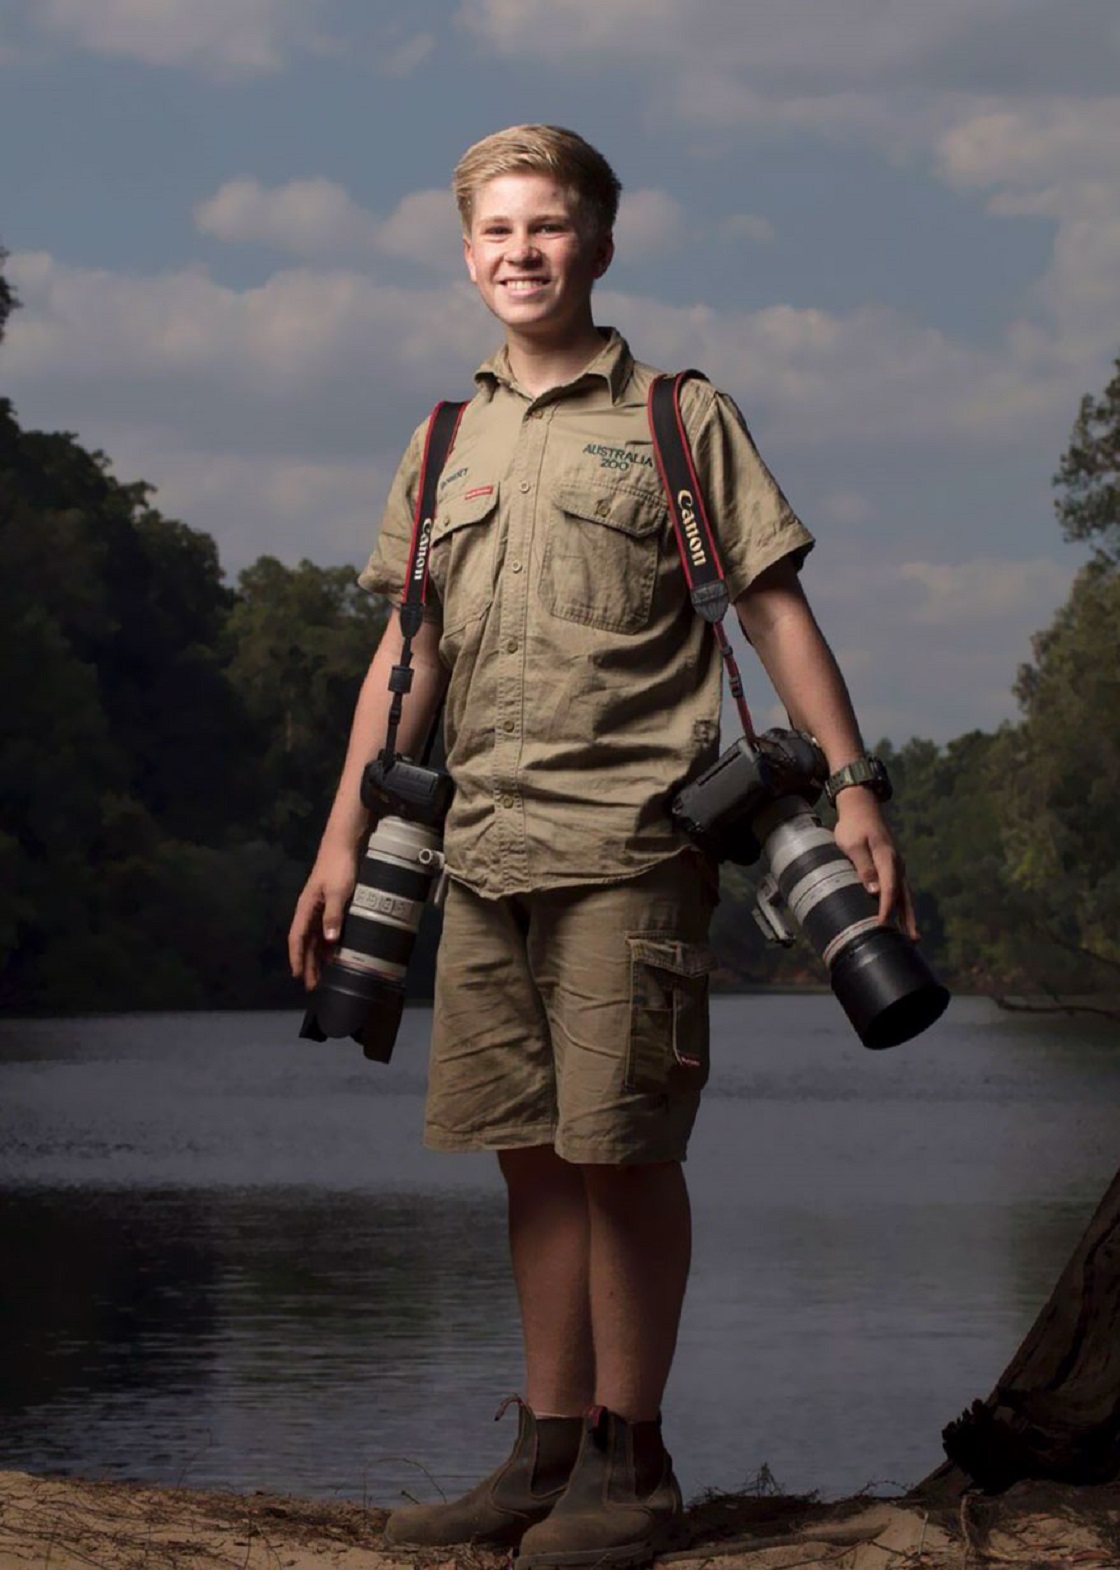 Fotografías de vida salvaje - Robert, hijo de Steve Irwin